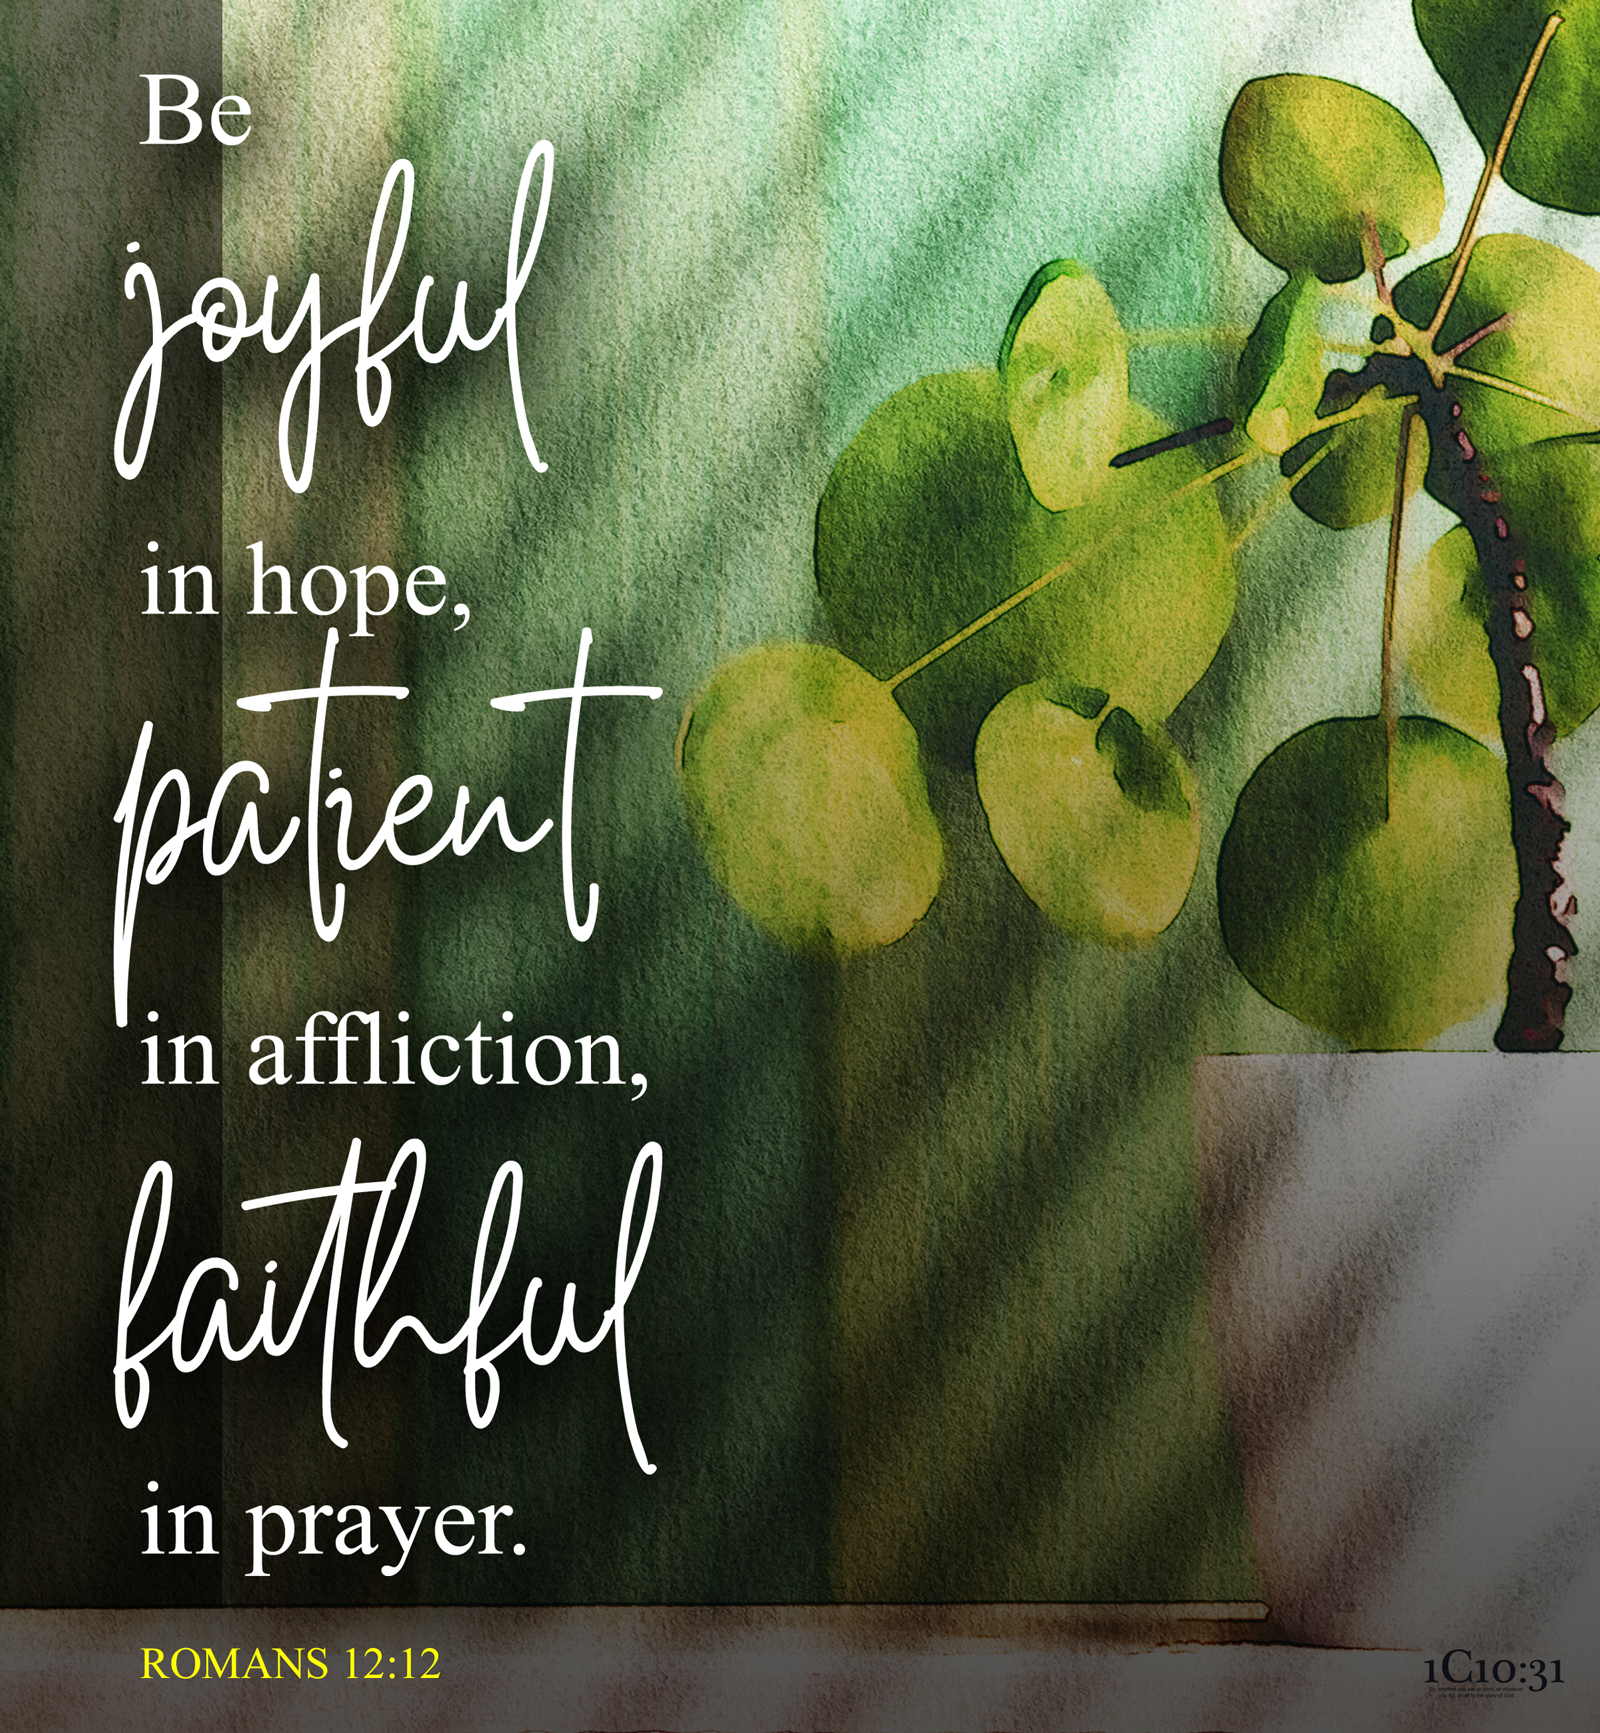 Romans 12:12 Be joyful in hope, patient in affliction, faithful in prayer.